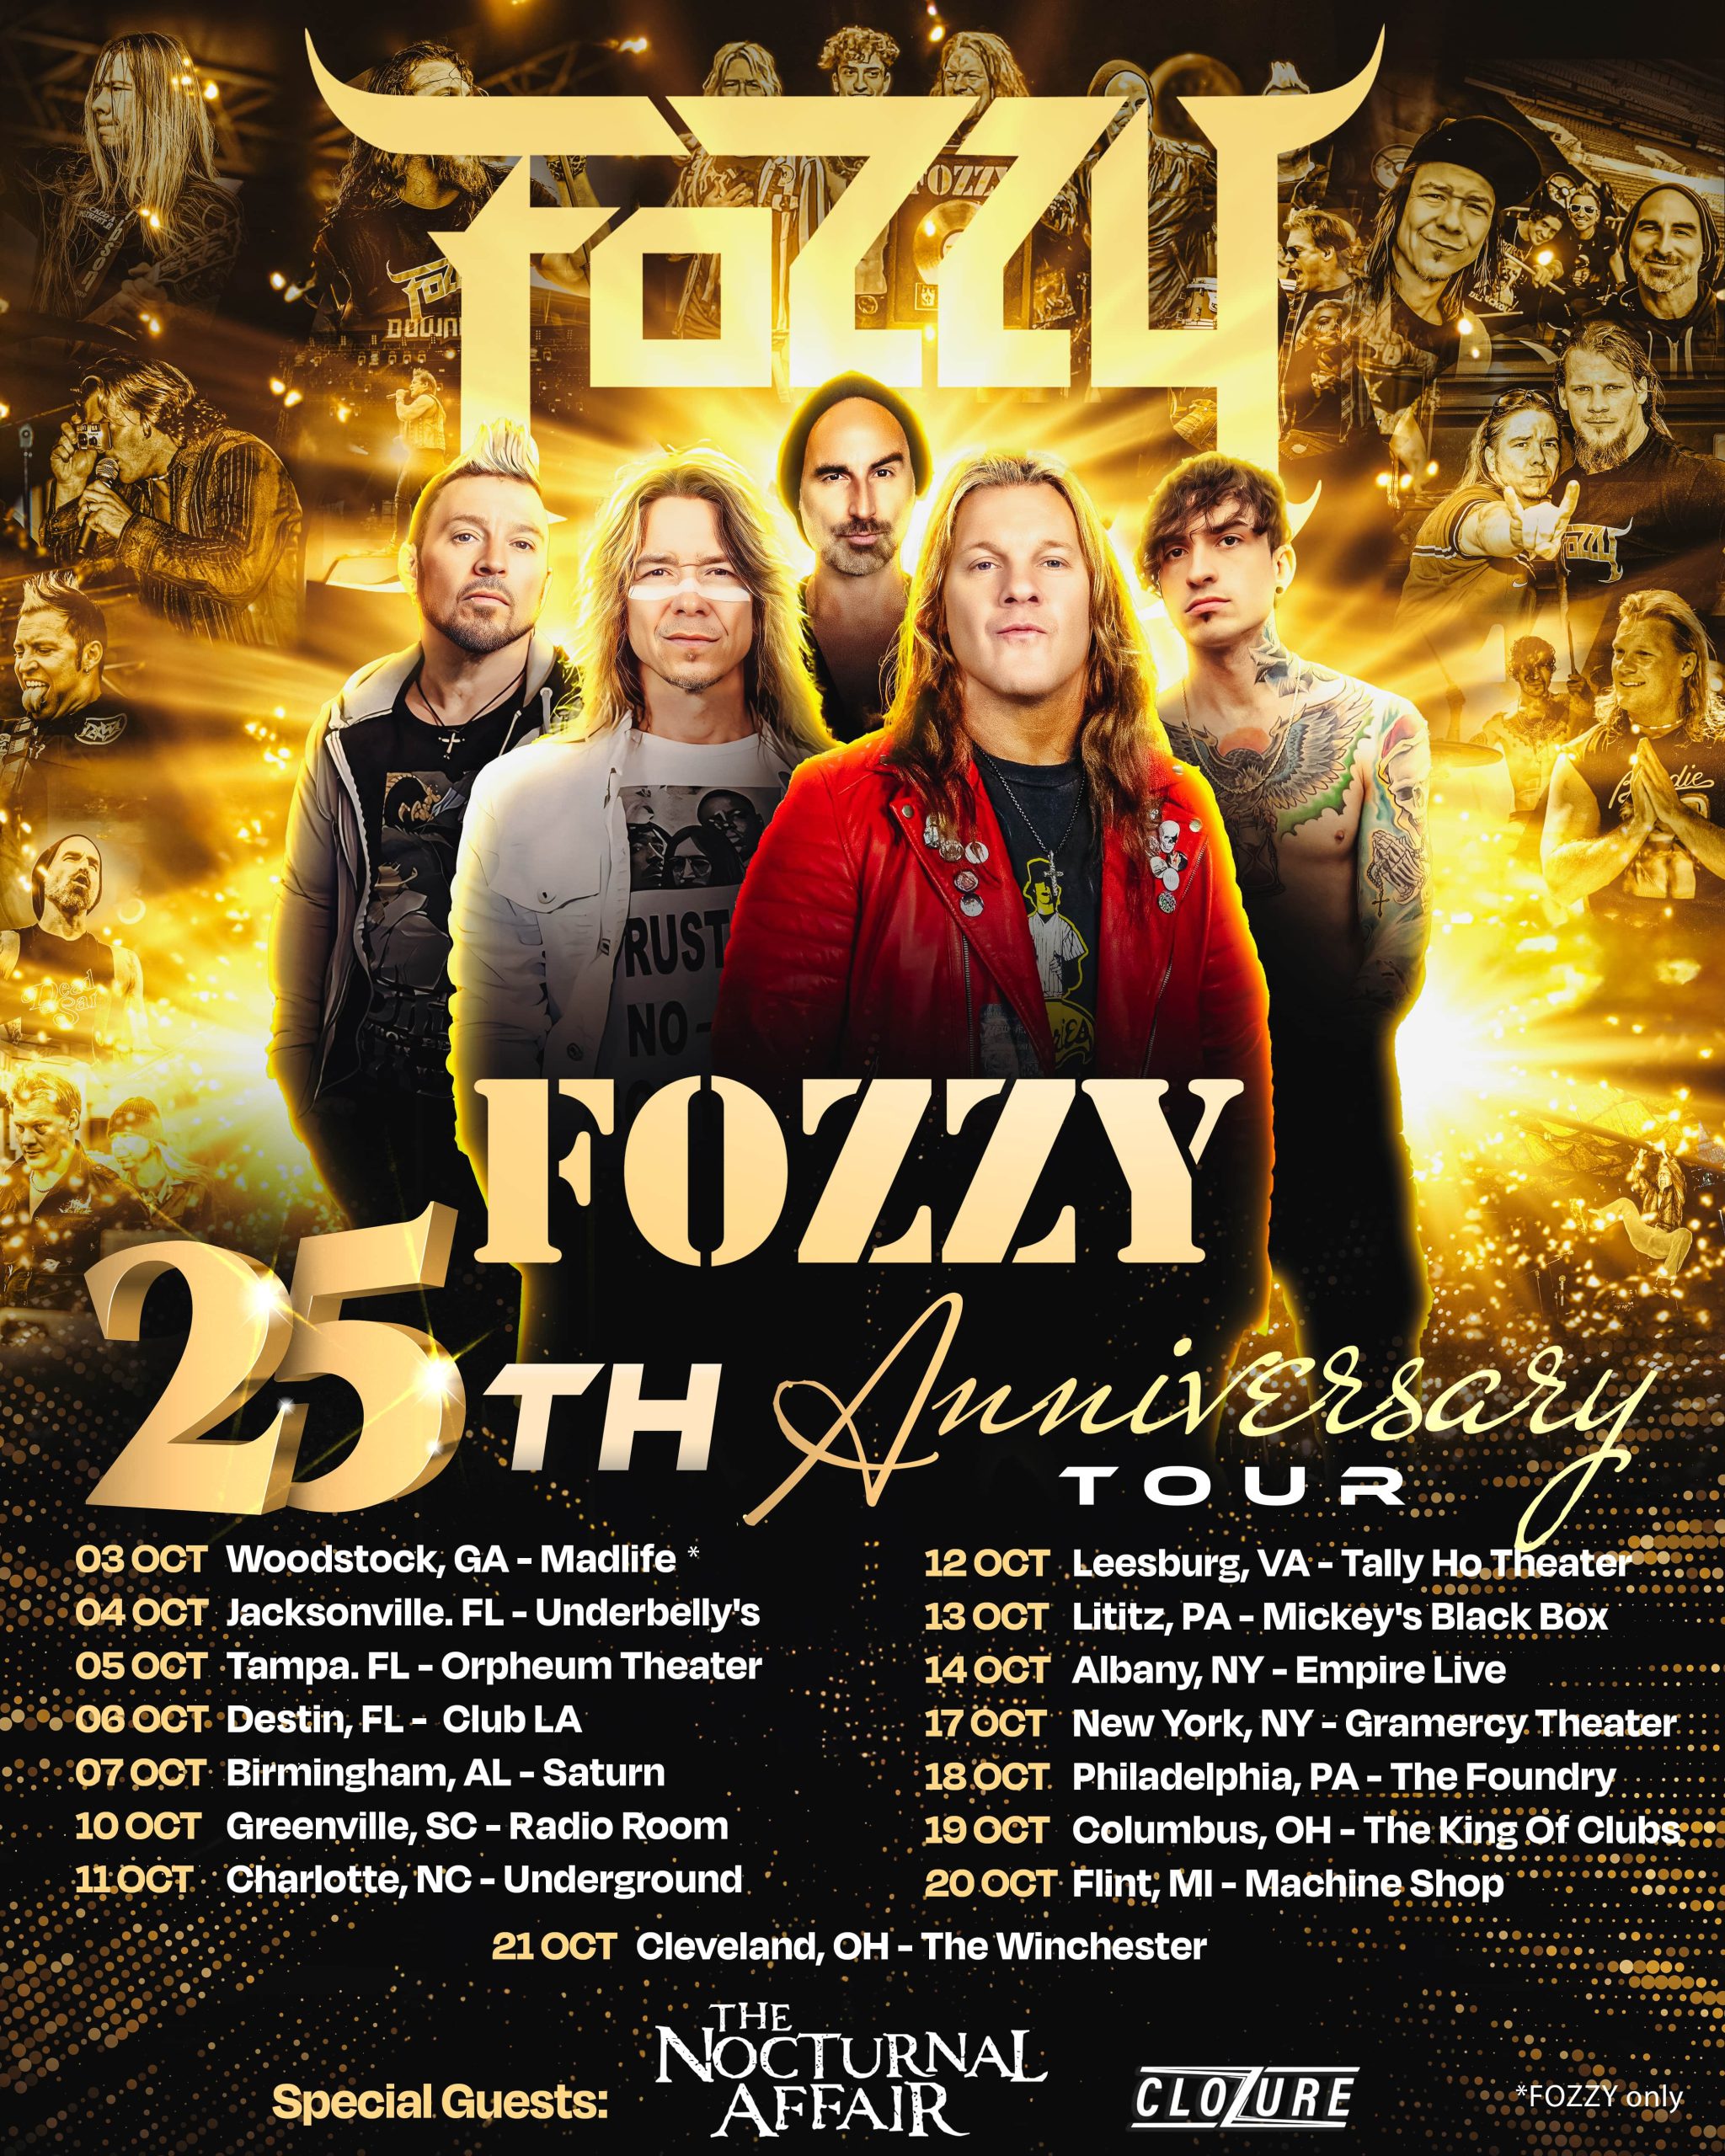 Fozzy 25th Anniversary tour 